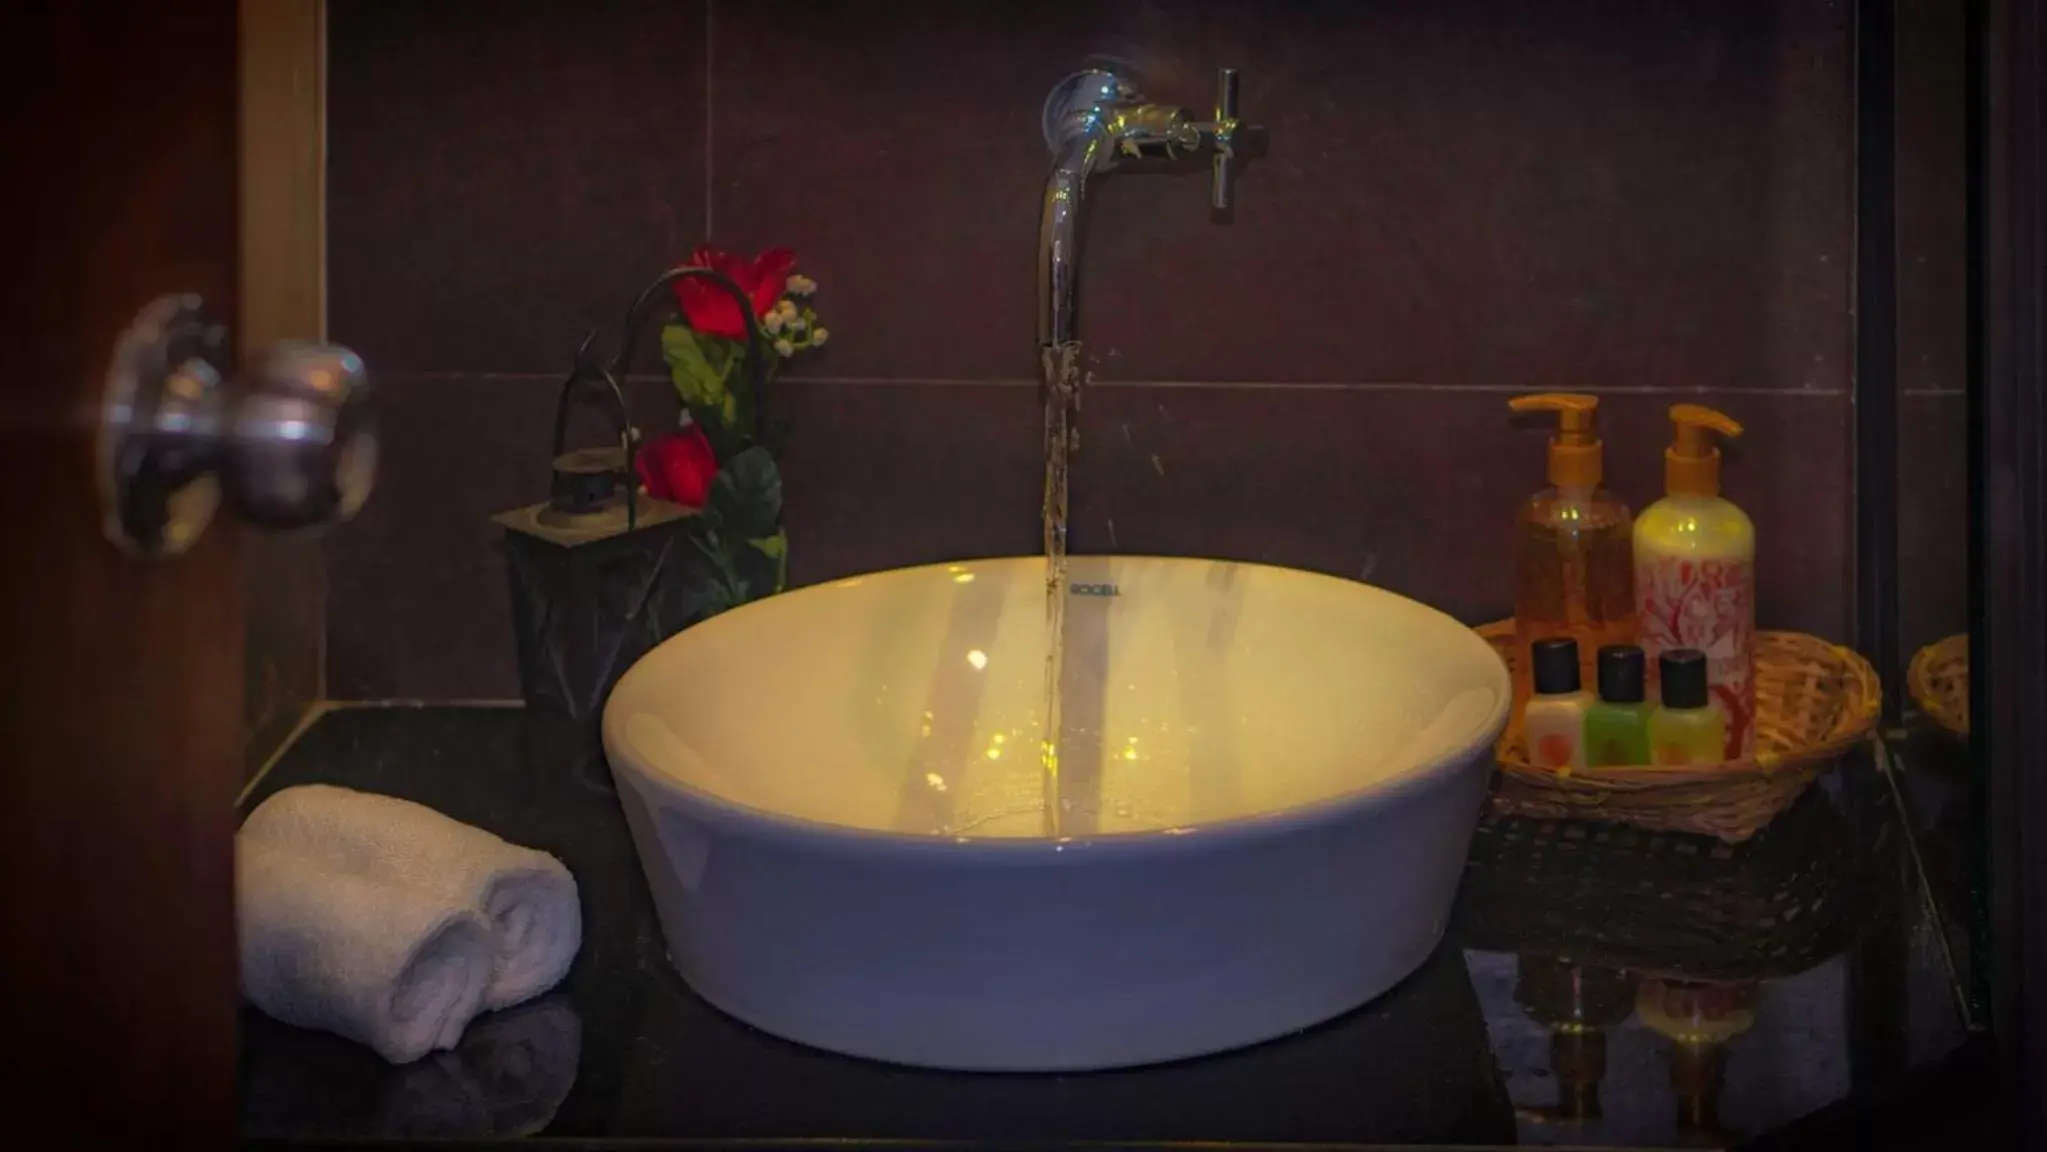 Bathroom in Hive 68 - Hotel and Resorts (Negombo)